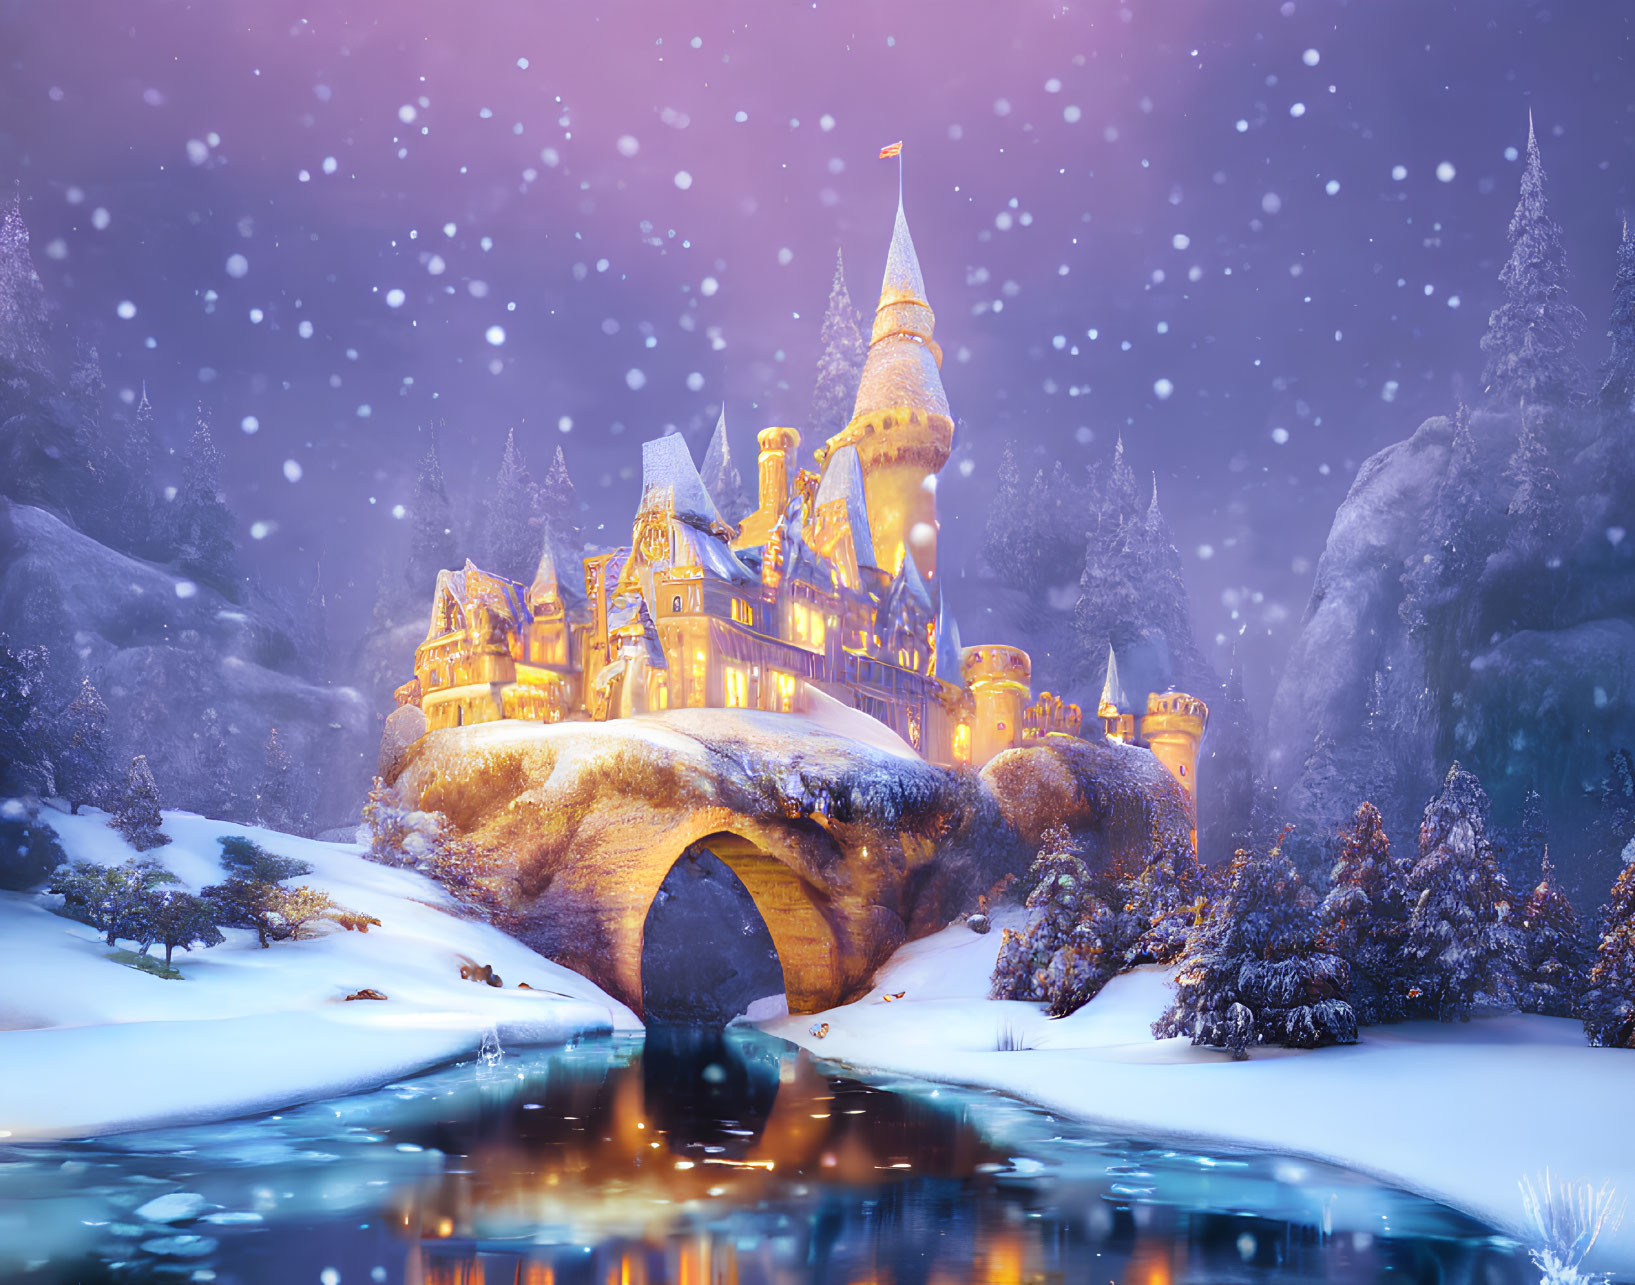 Snowy castle scene: illuminated windows, stone bridge, reflective river, falling snowflakes